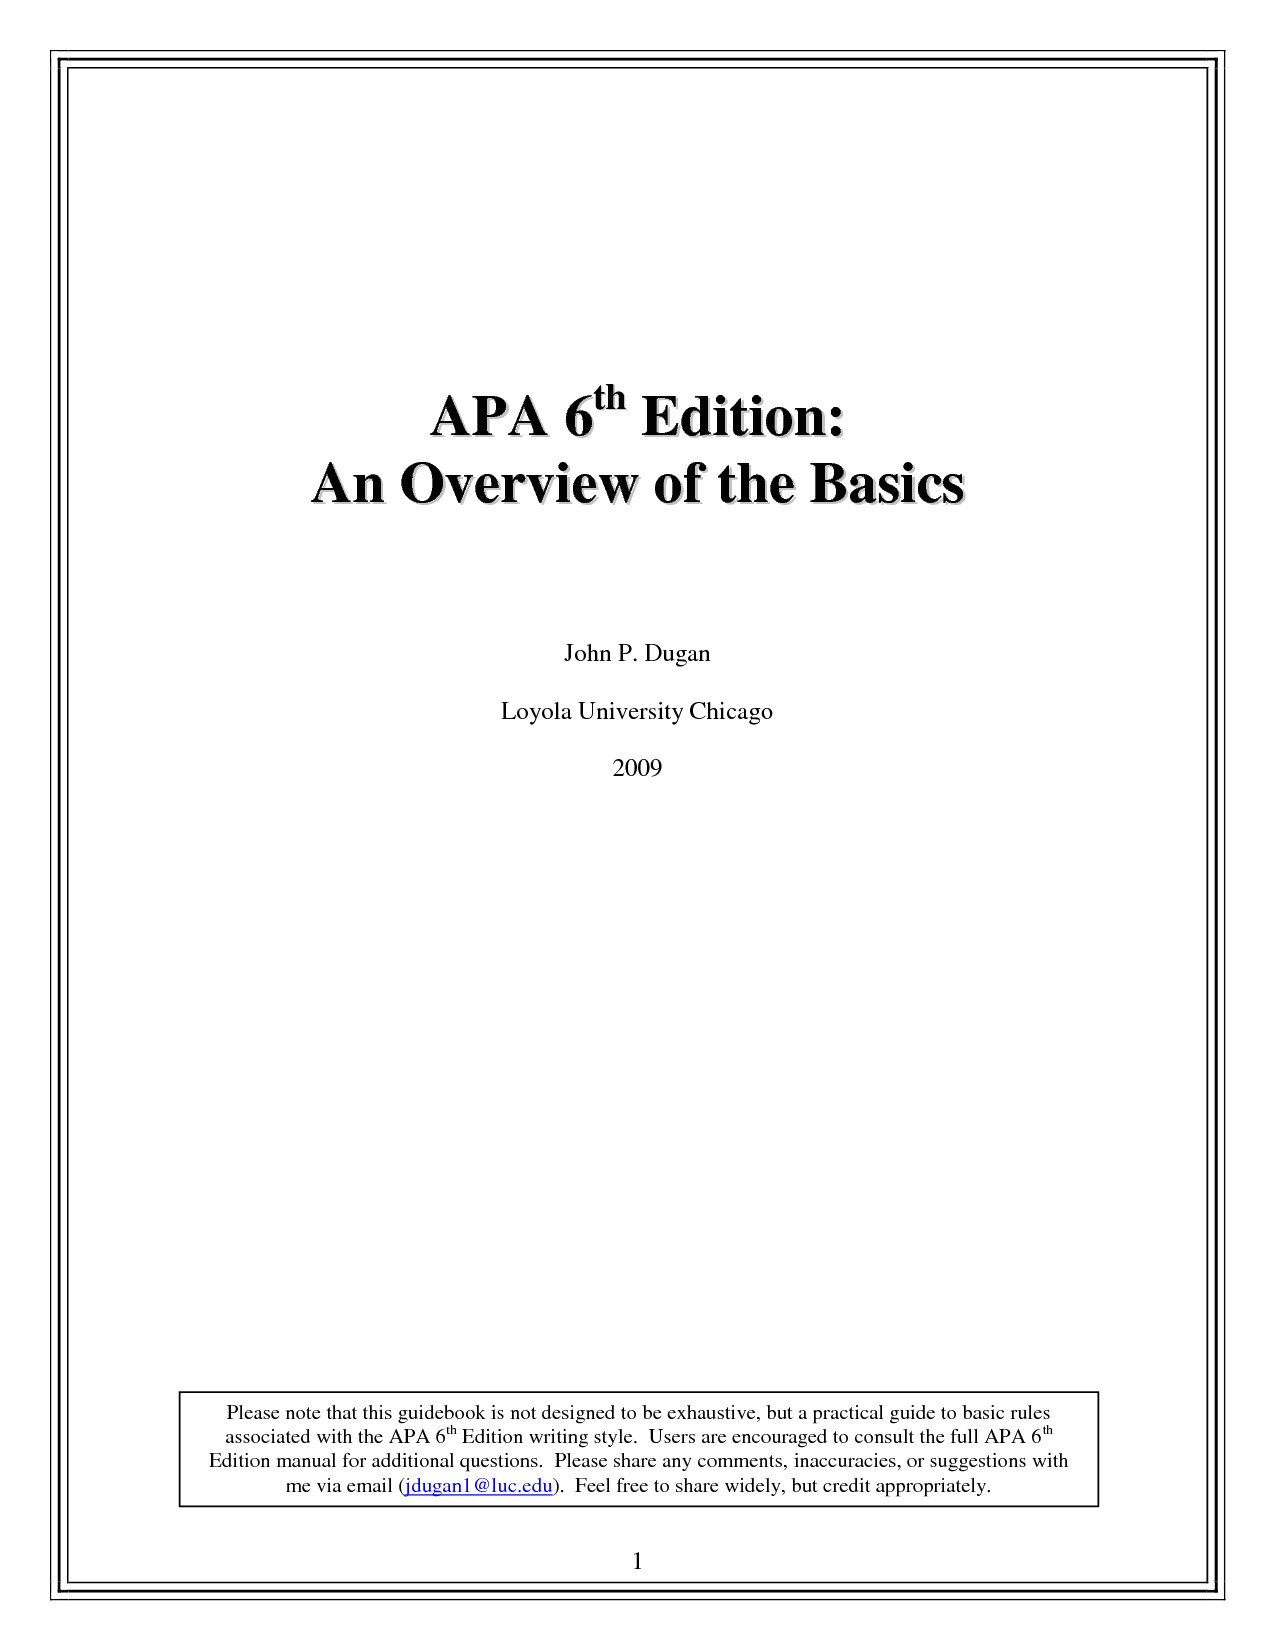 Microsoft Office Apa 6th Edition Template Apa 6th Edition Template E Commerce